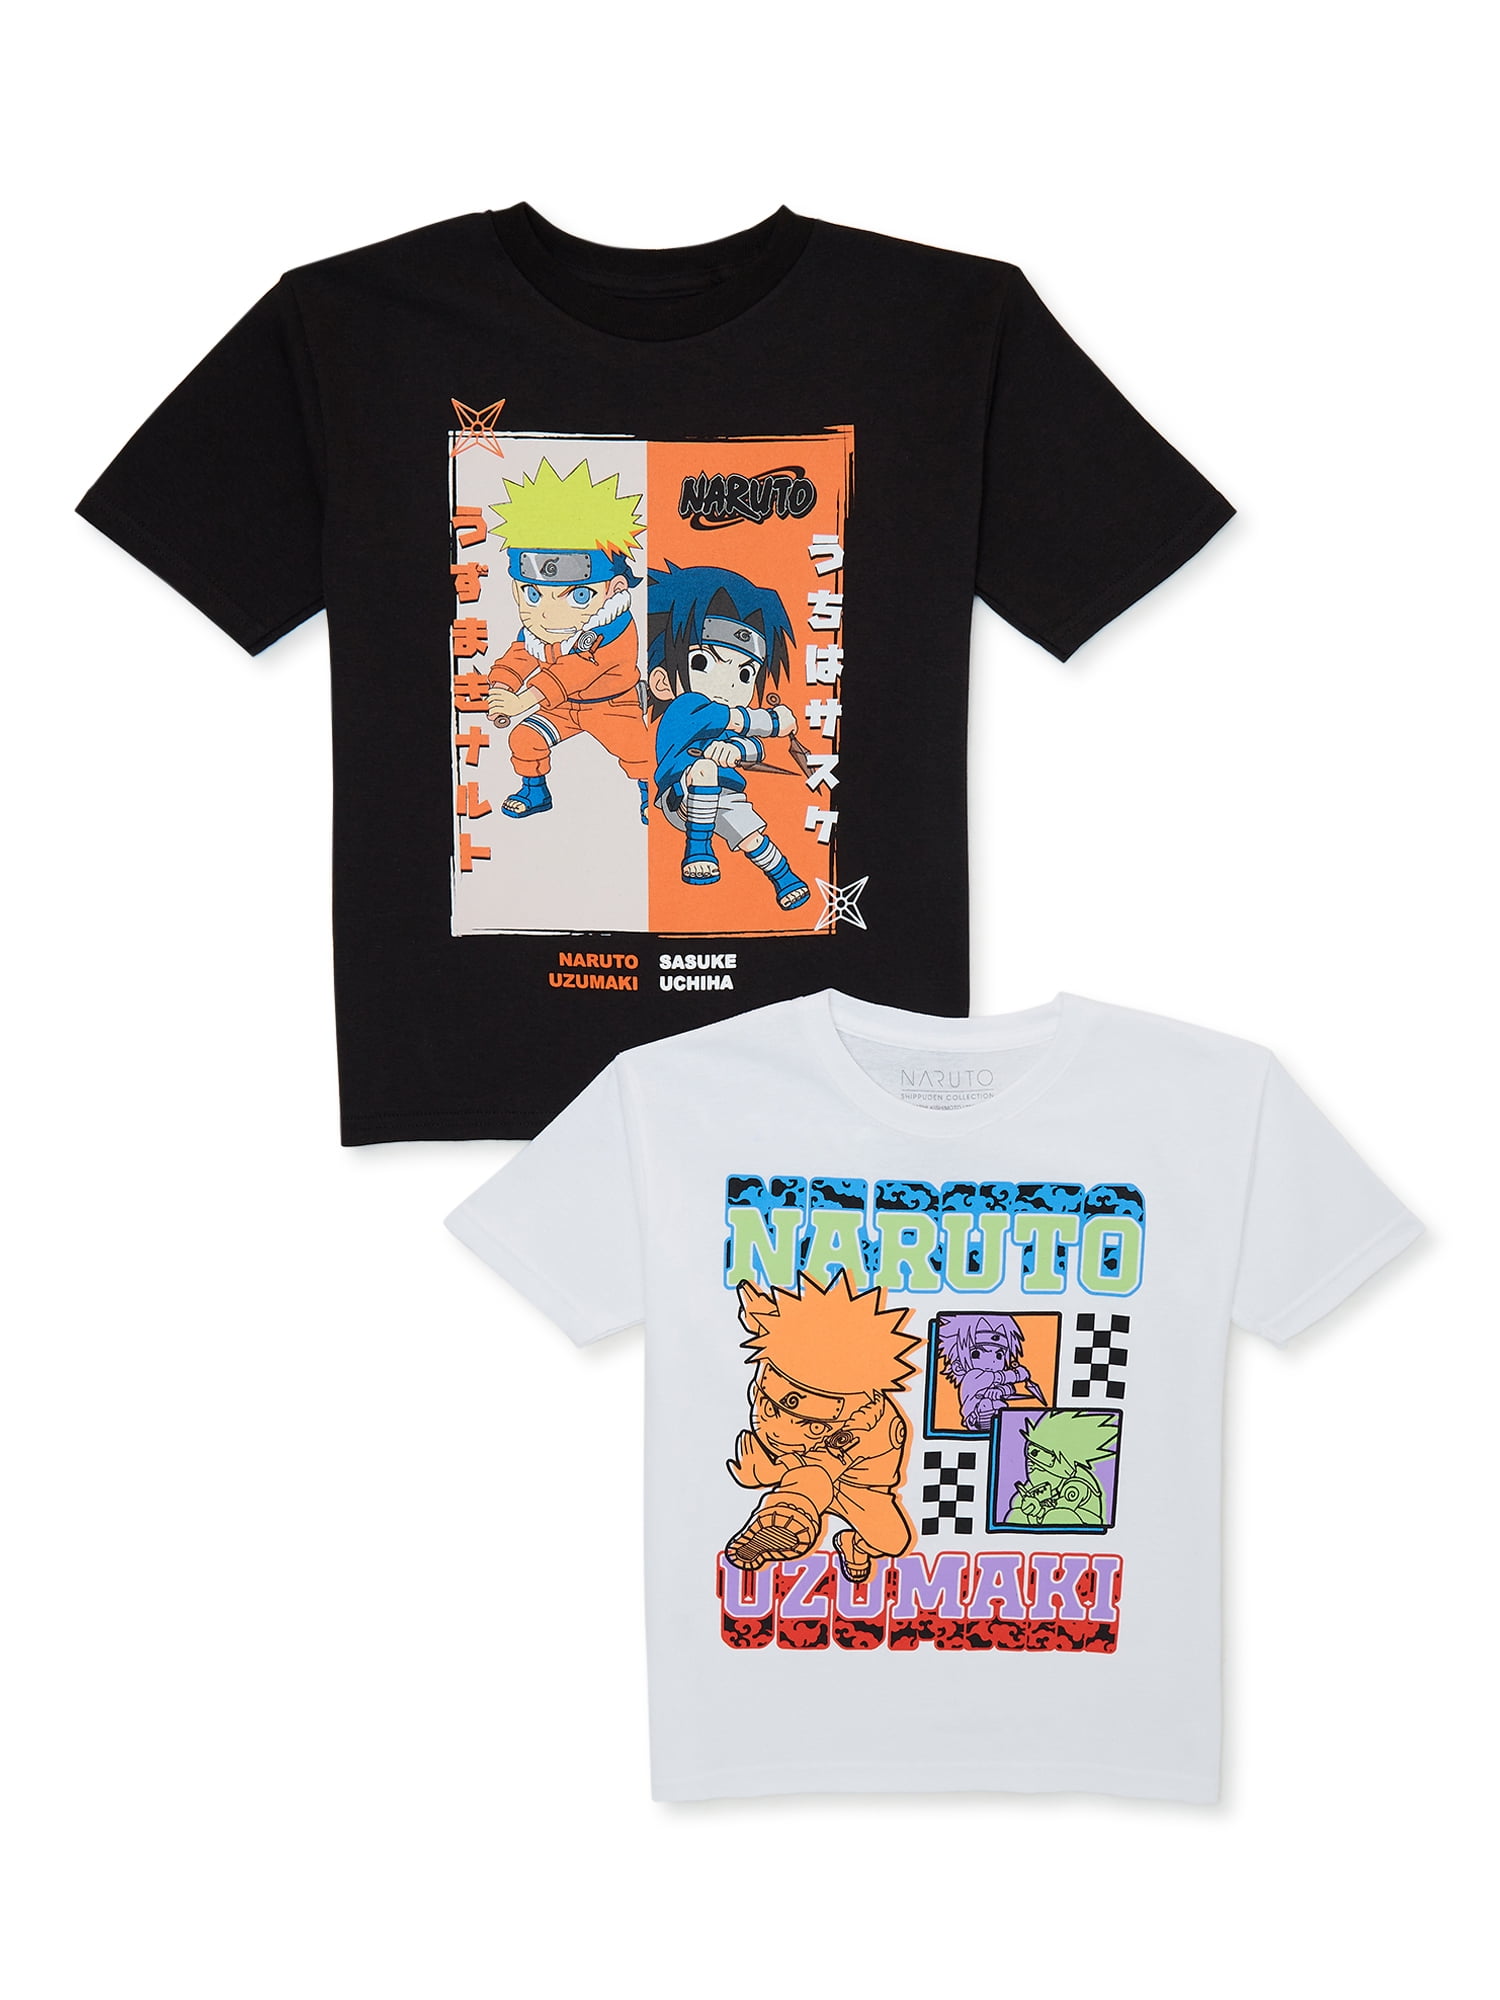 Naruto Shippuden Boys Group Shot Graphic T-Shirts, 2-Pack, Sizes 4